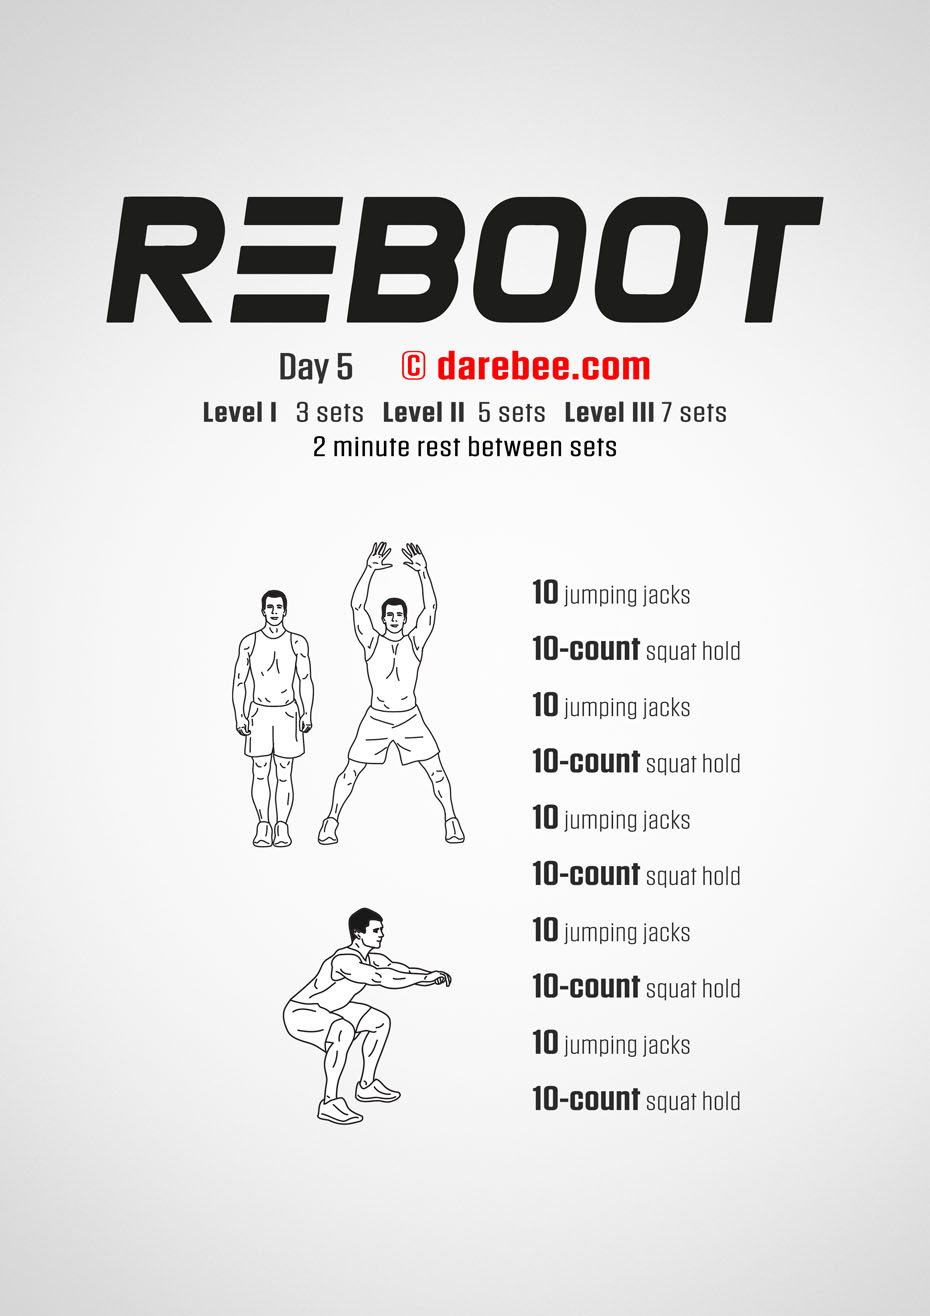 Reboot - No-Equipment Fitness Program by DAREBEE